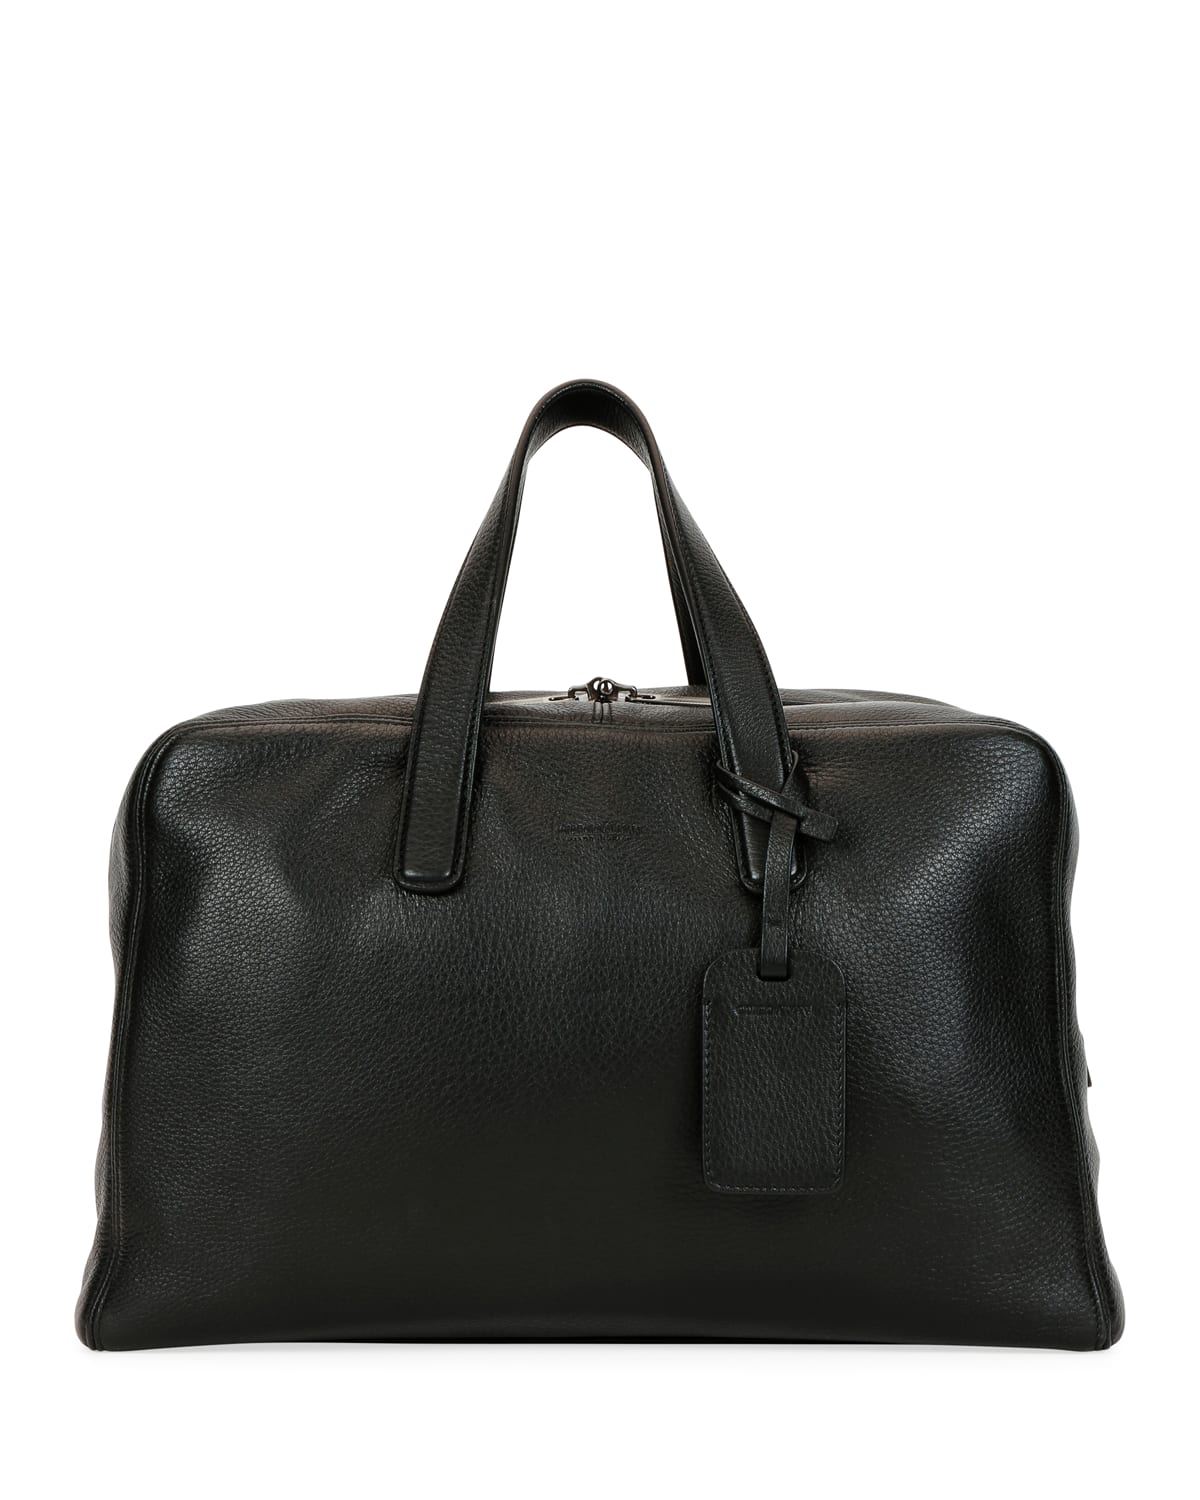 Giorgio Armani Men's Deer Leather Carryall Duffel Bag, Black